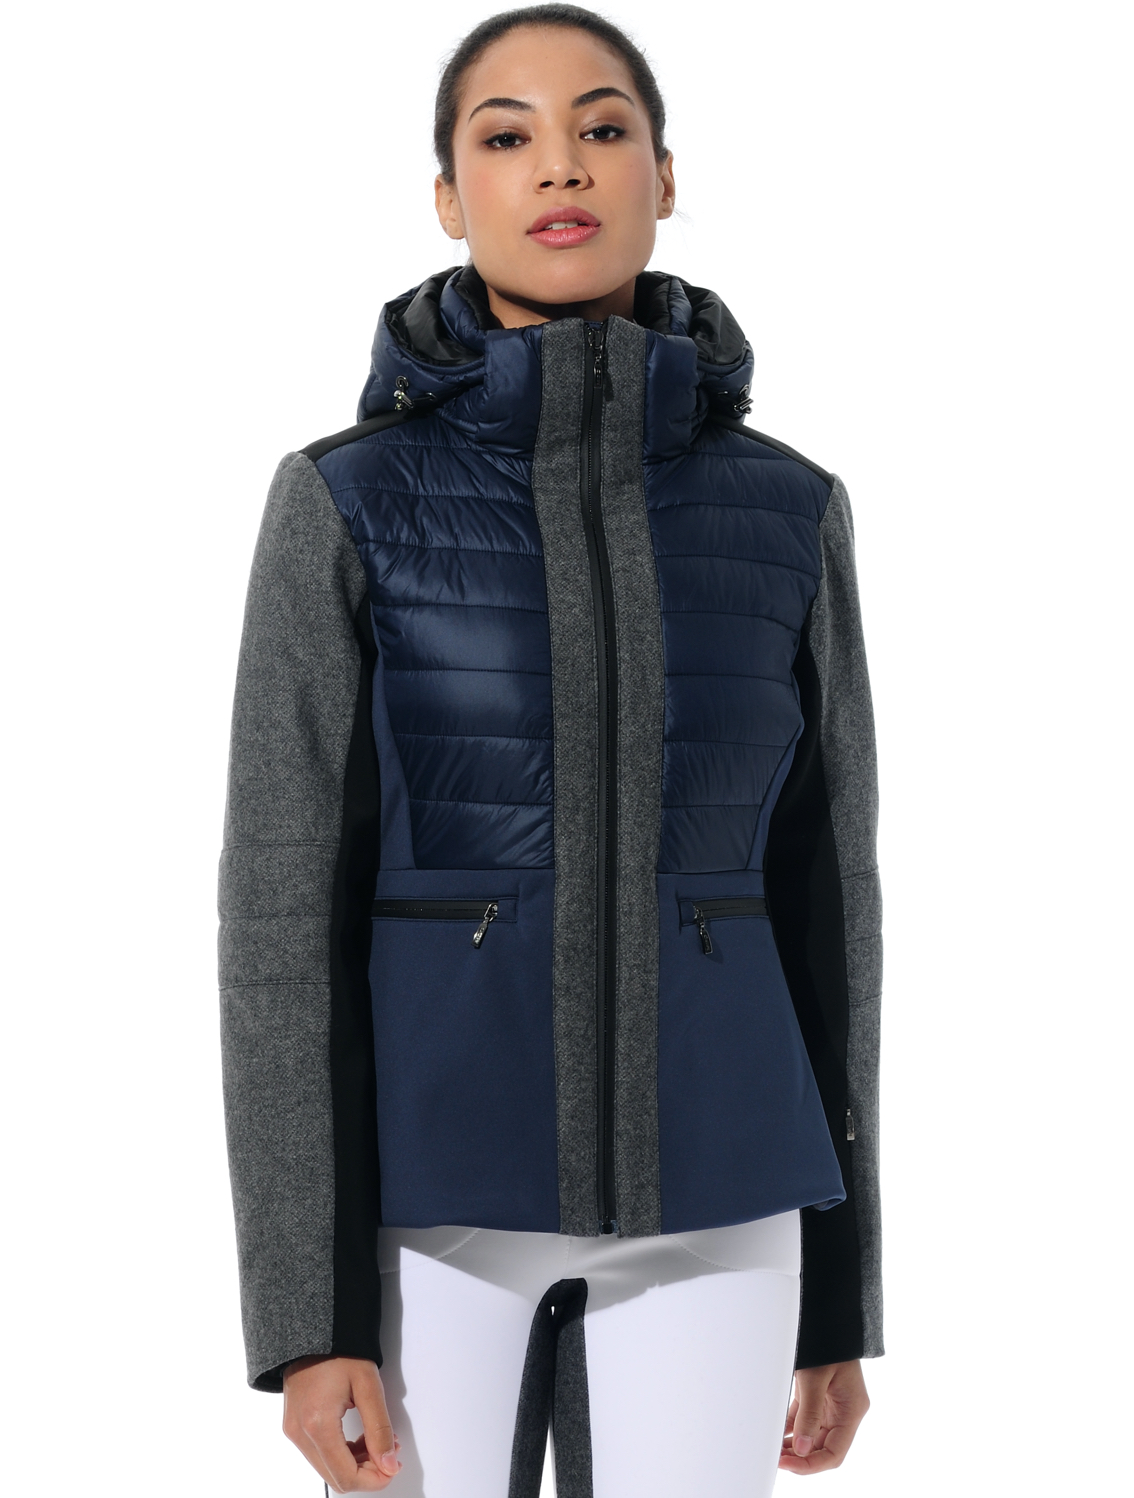 stretch ski jacket with loden details navy/grey 